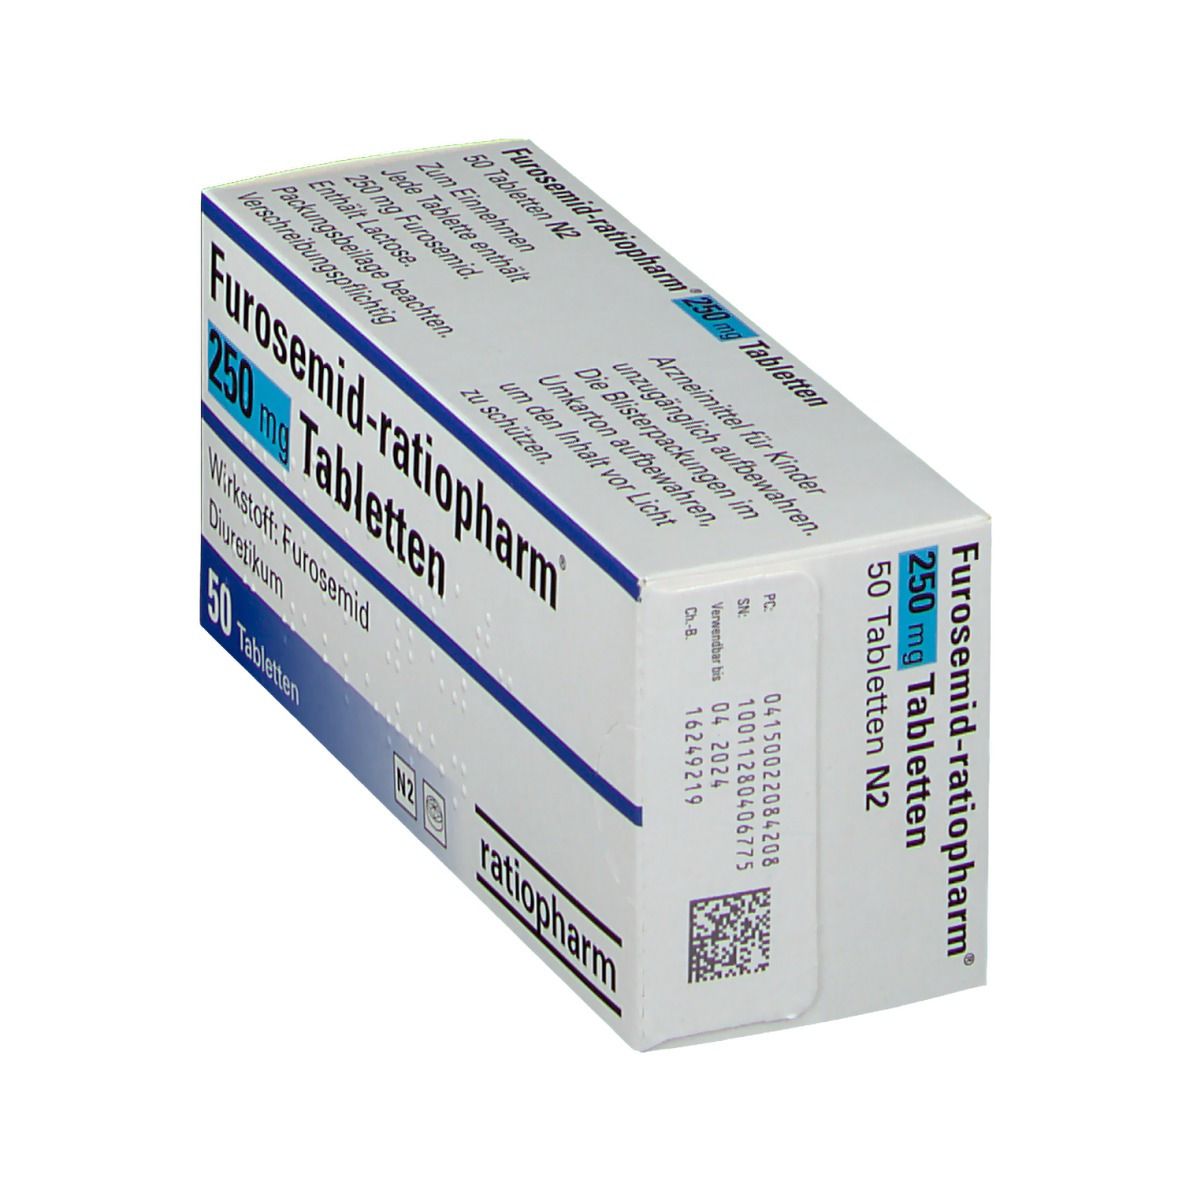 Furosemid-ratiopharm® 250 mg